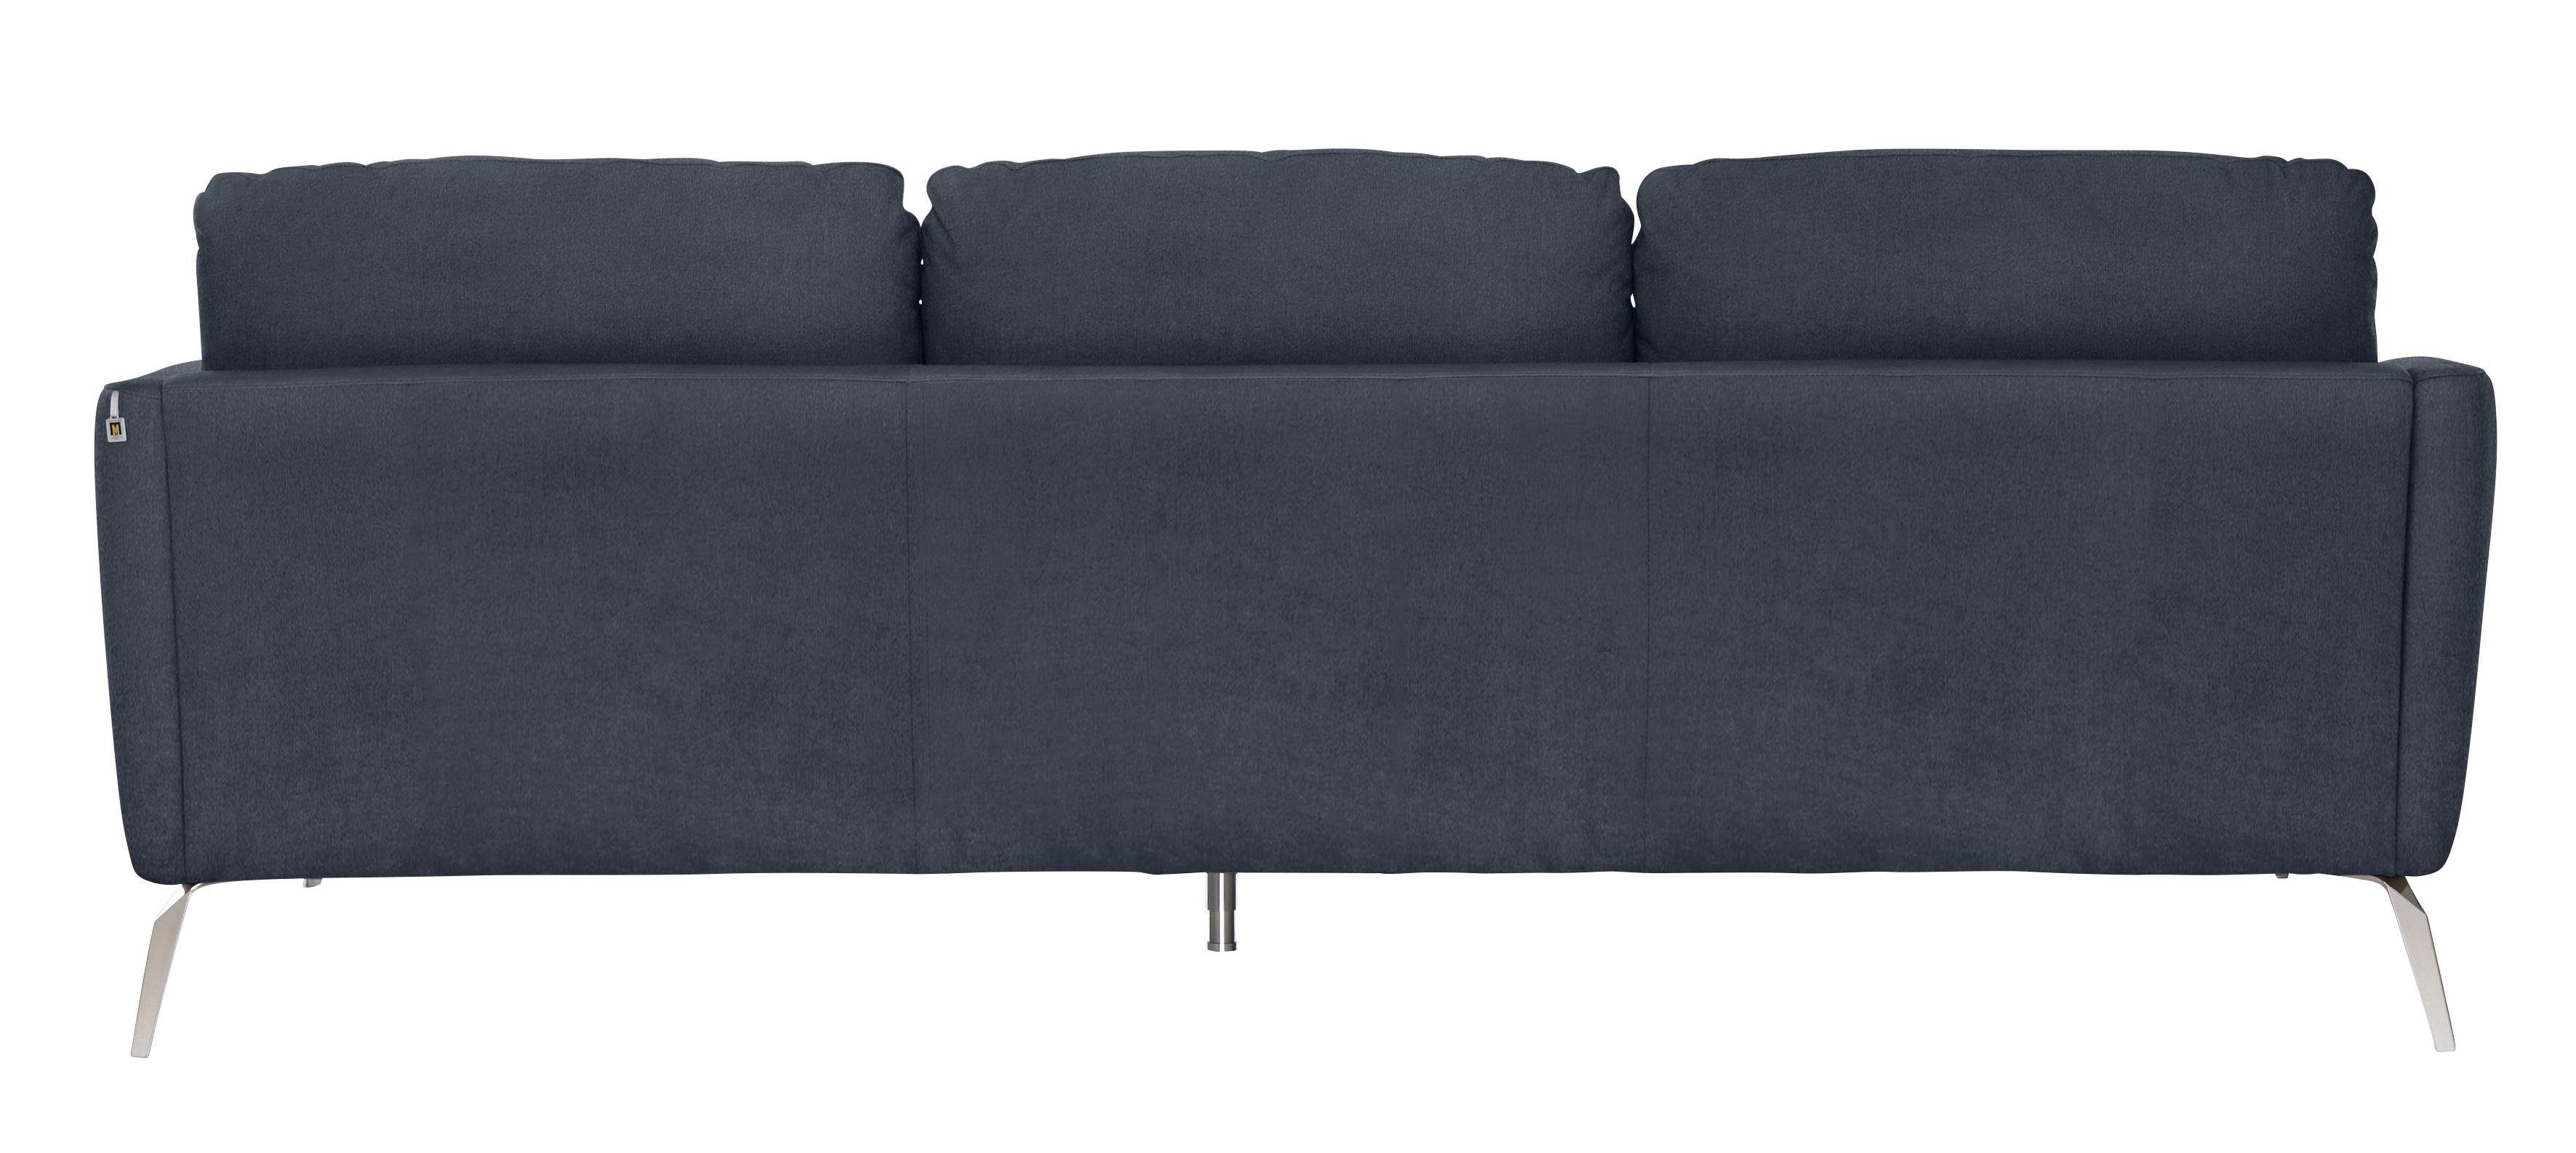 W.SCHILLIG im mit Sitz, glänzend Heftung Big-Sofa dekorativer Chrom Füße softy,